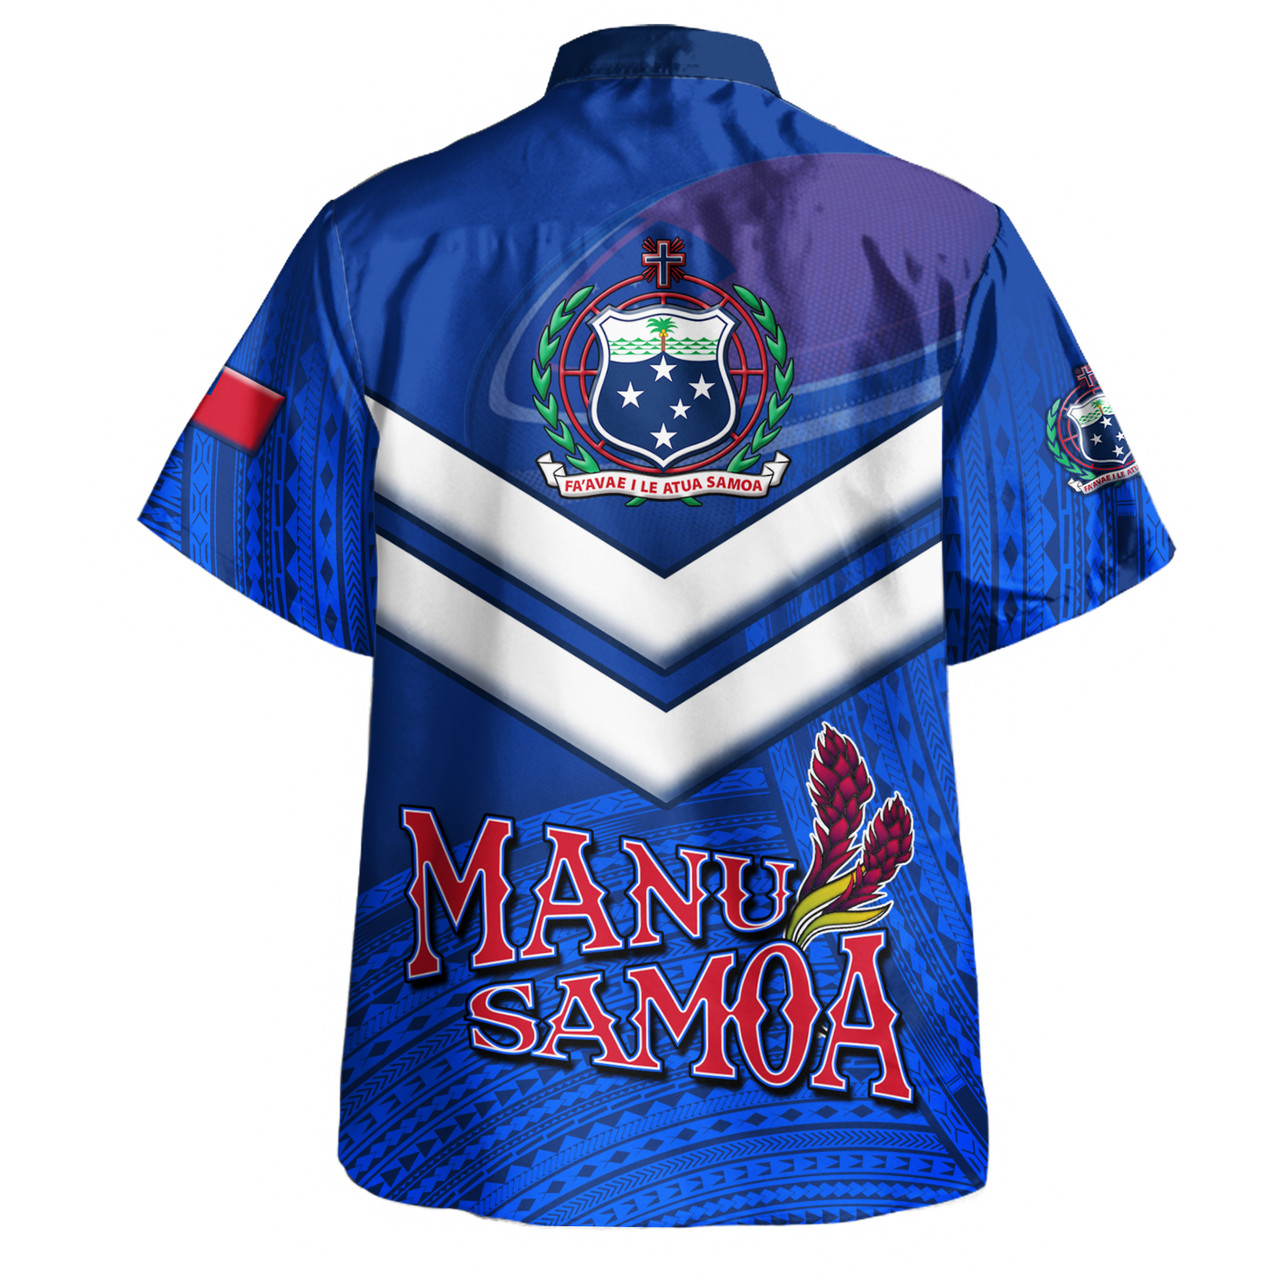 Samoa Hawaiian Shirt Samoa Tradition Patterns With Rugby Ball